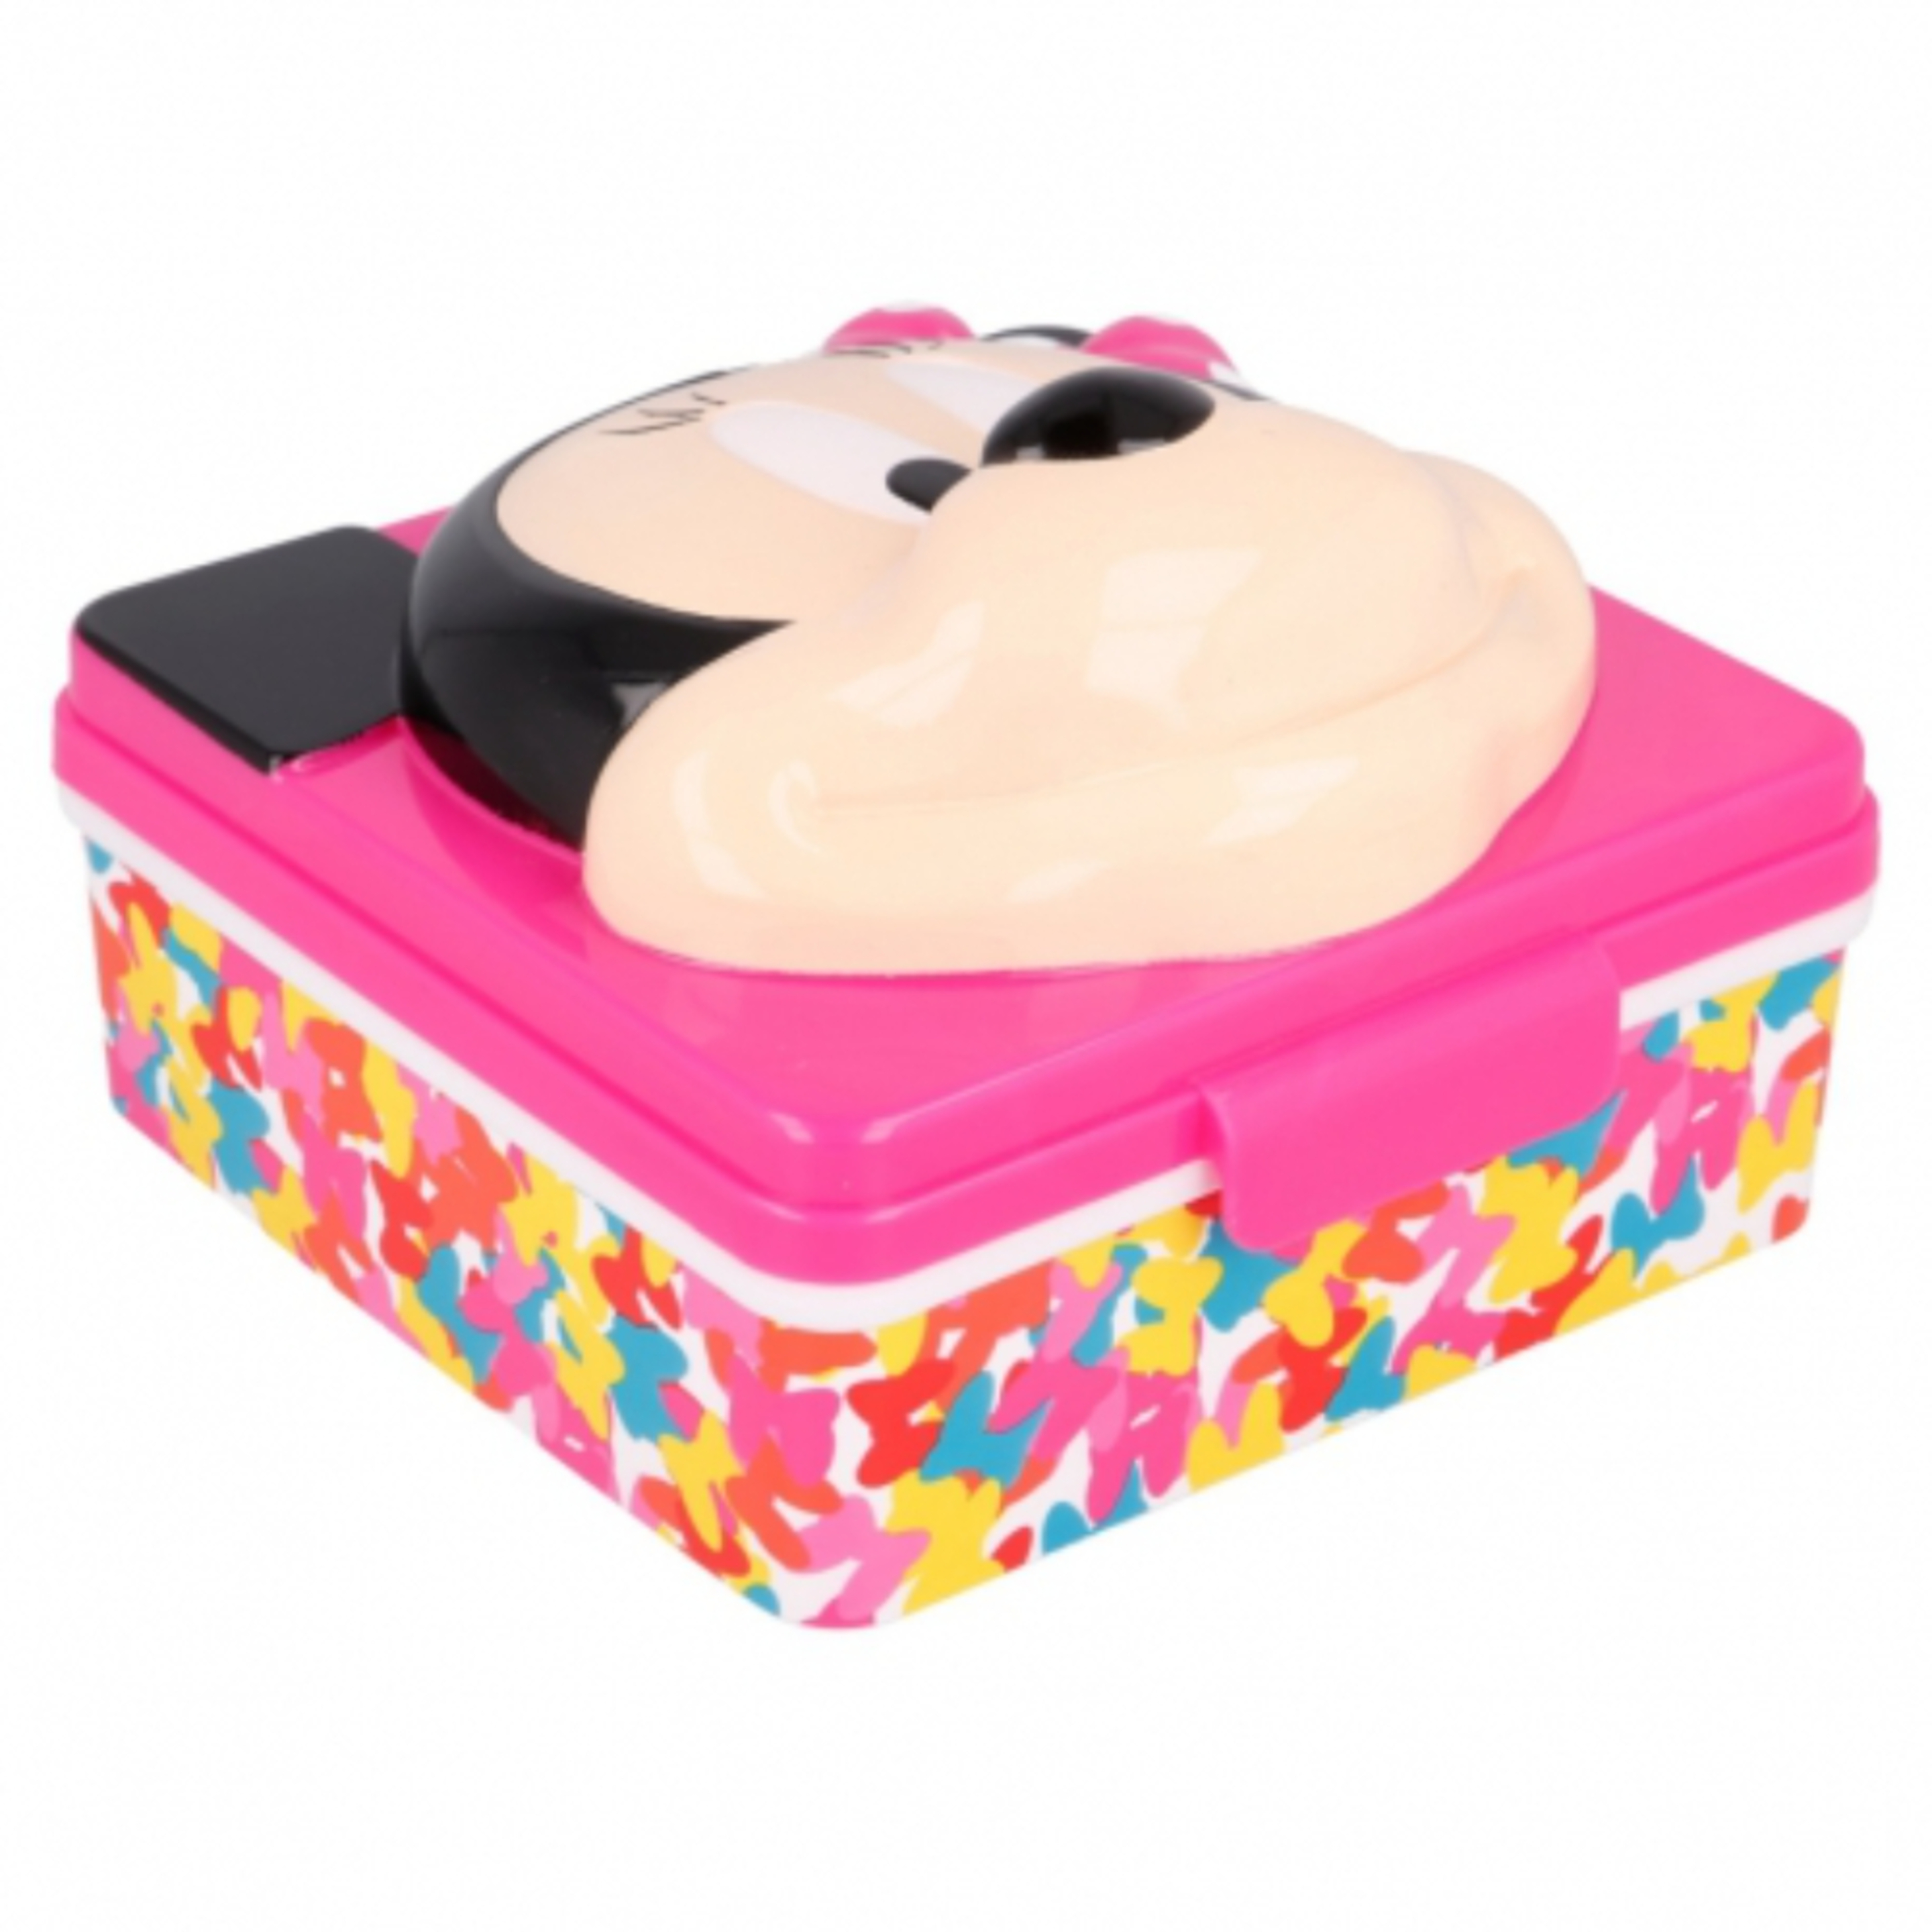 Sandwichera Minnie Mouse 65688 - multicolor - 